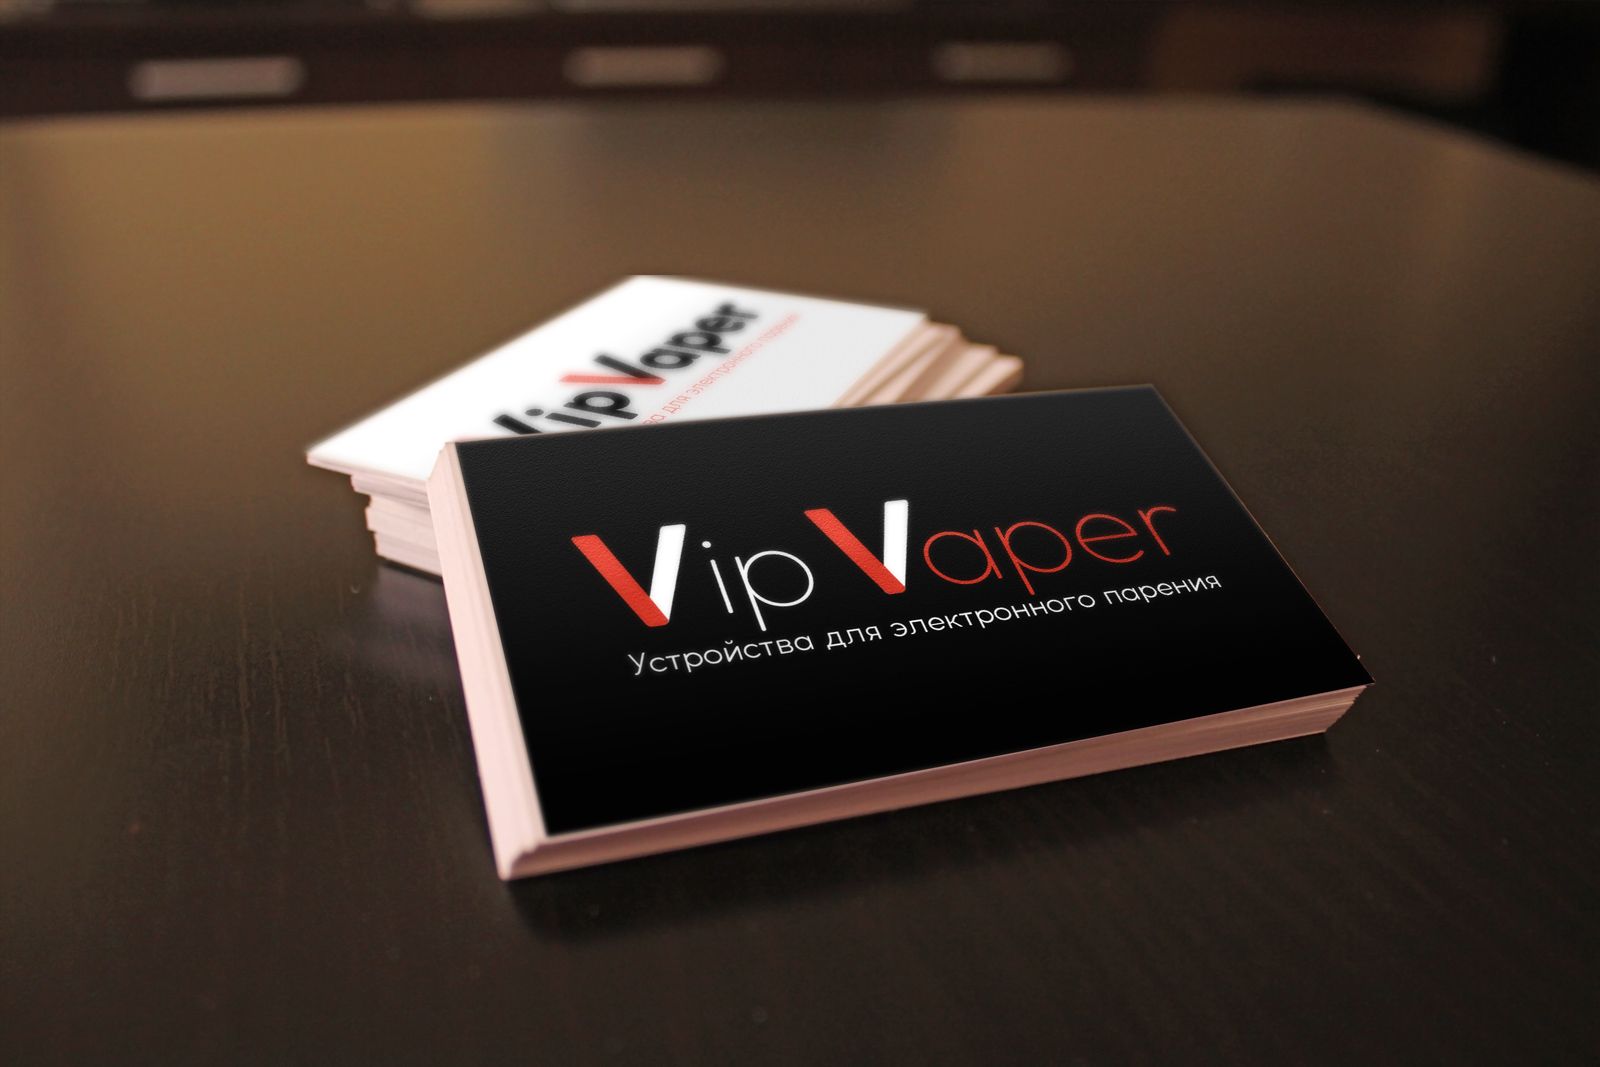 Логотип для VipVaper - дизайнер work27